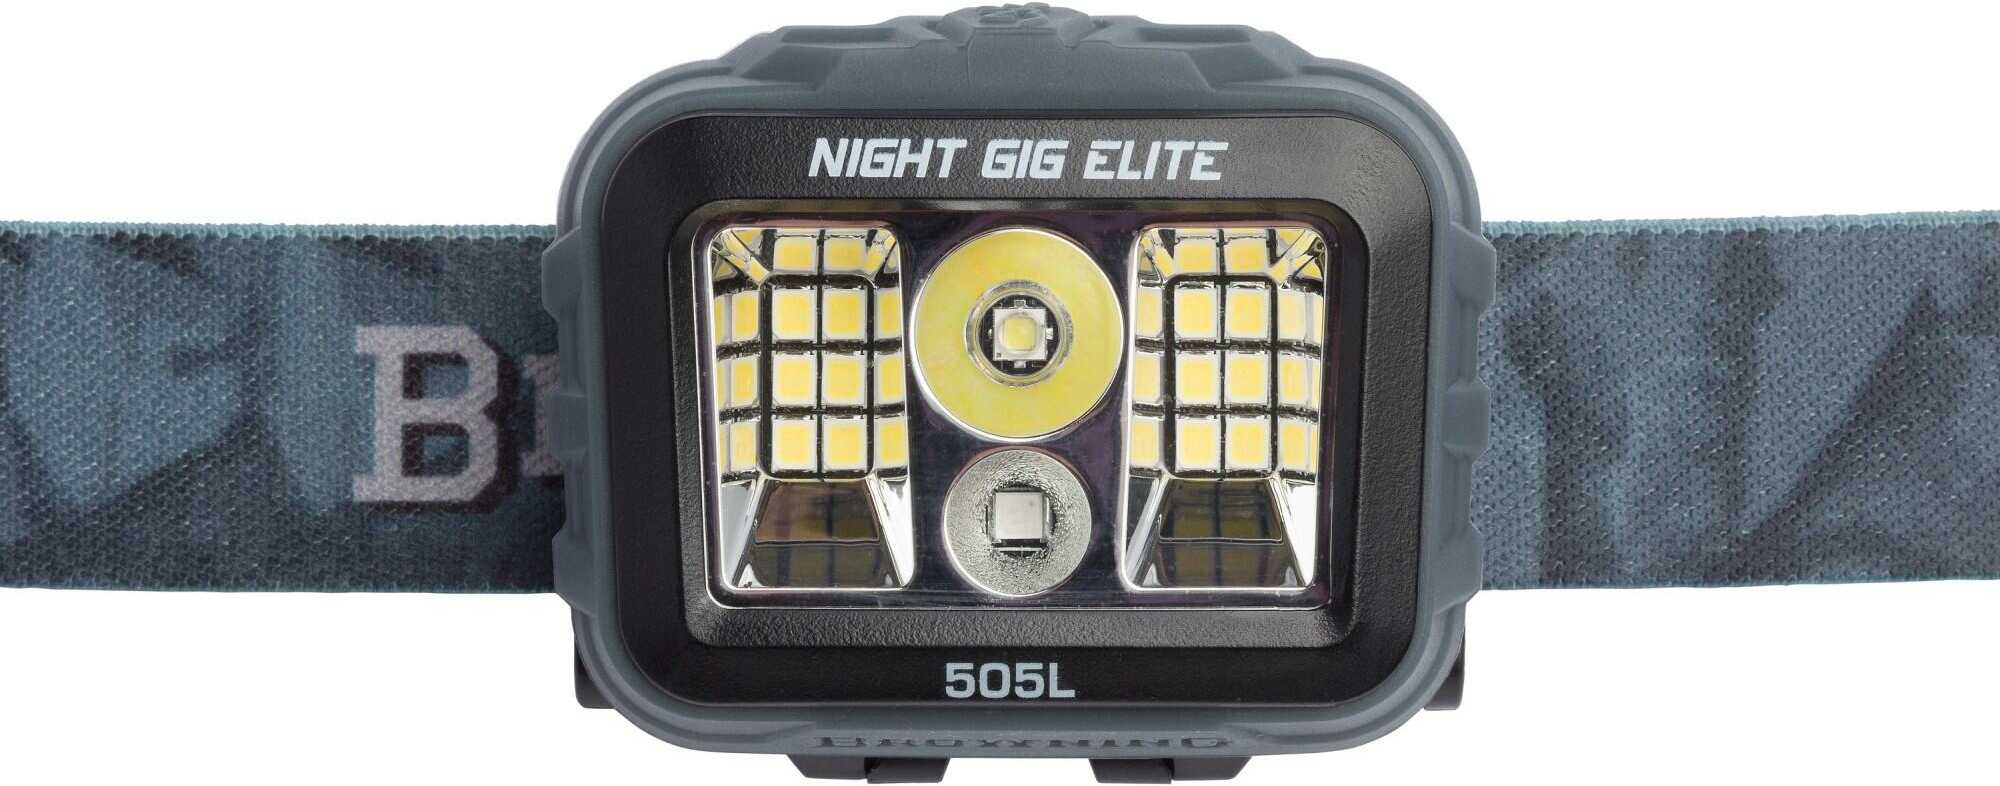 Browning Night Gig Elite Headlamp 25-505 Lumens Blue